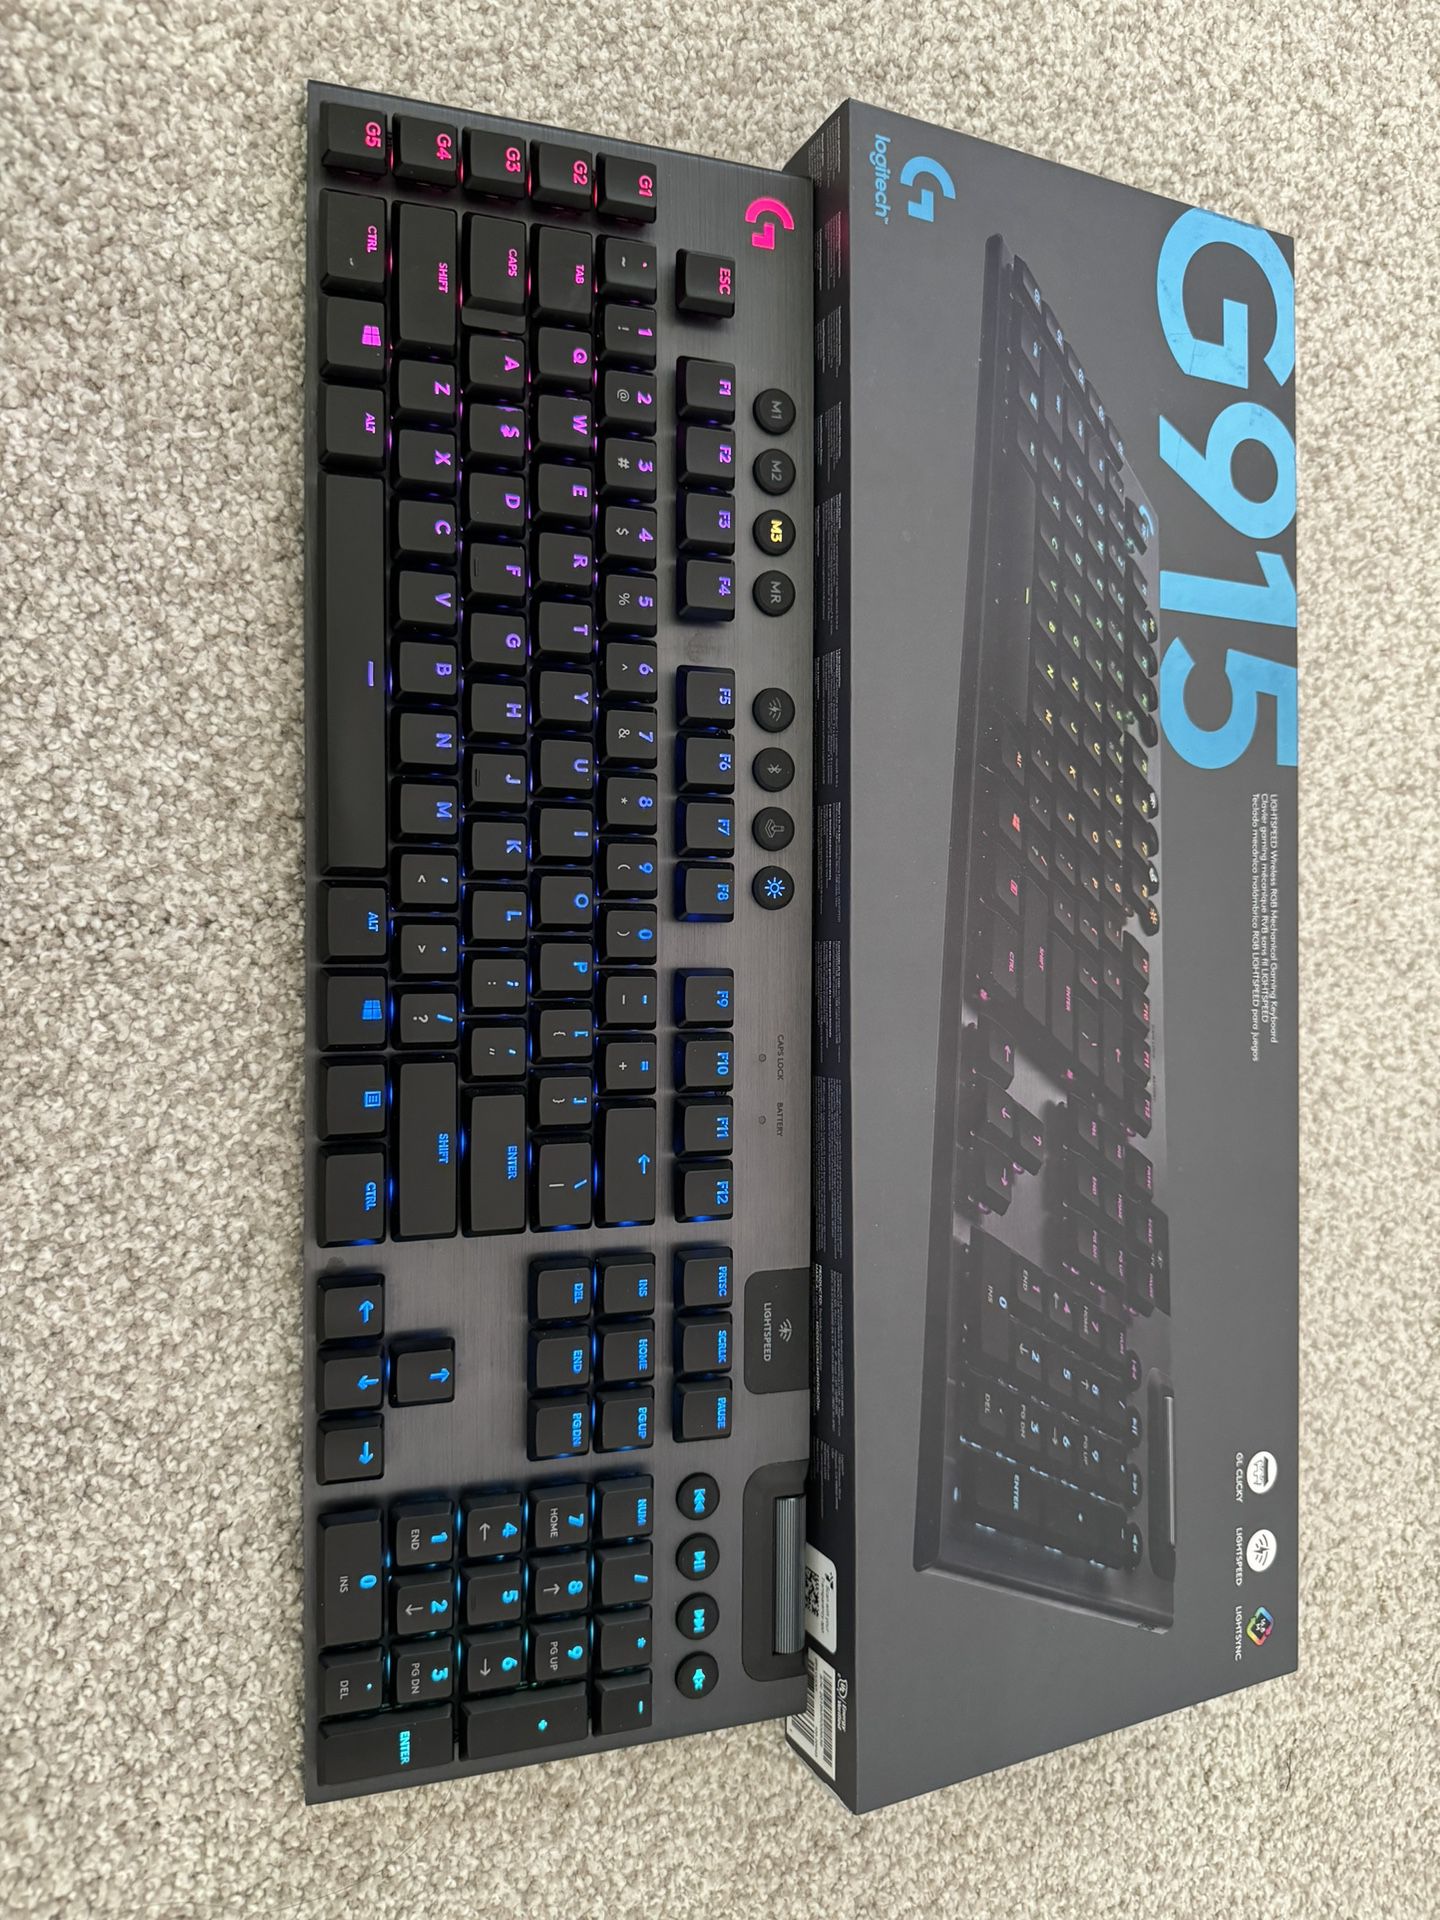 Logitech G915 Light speed keyboard